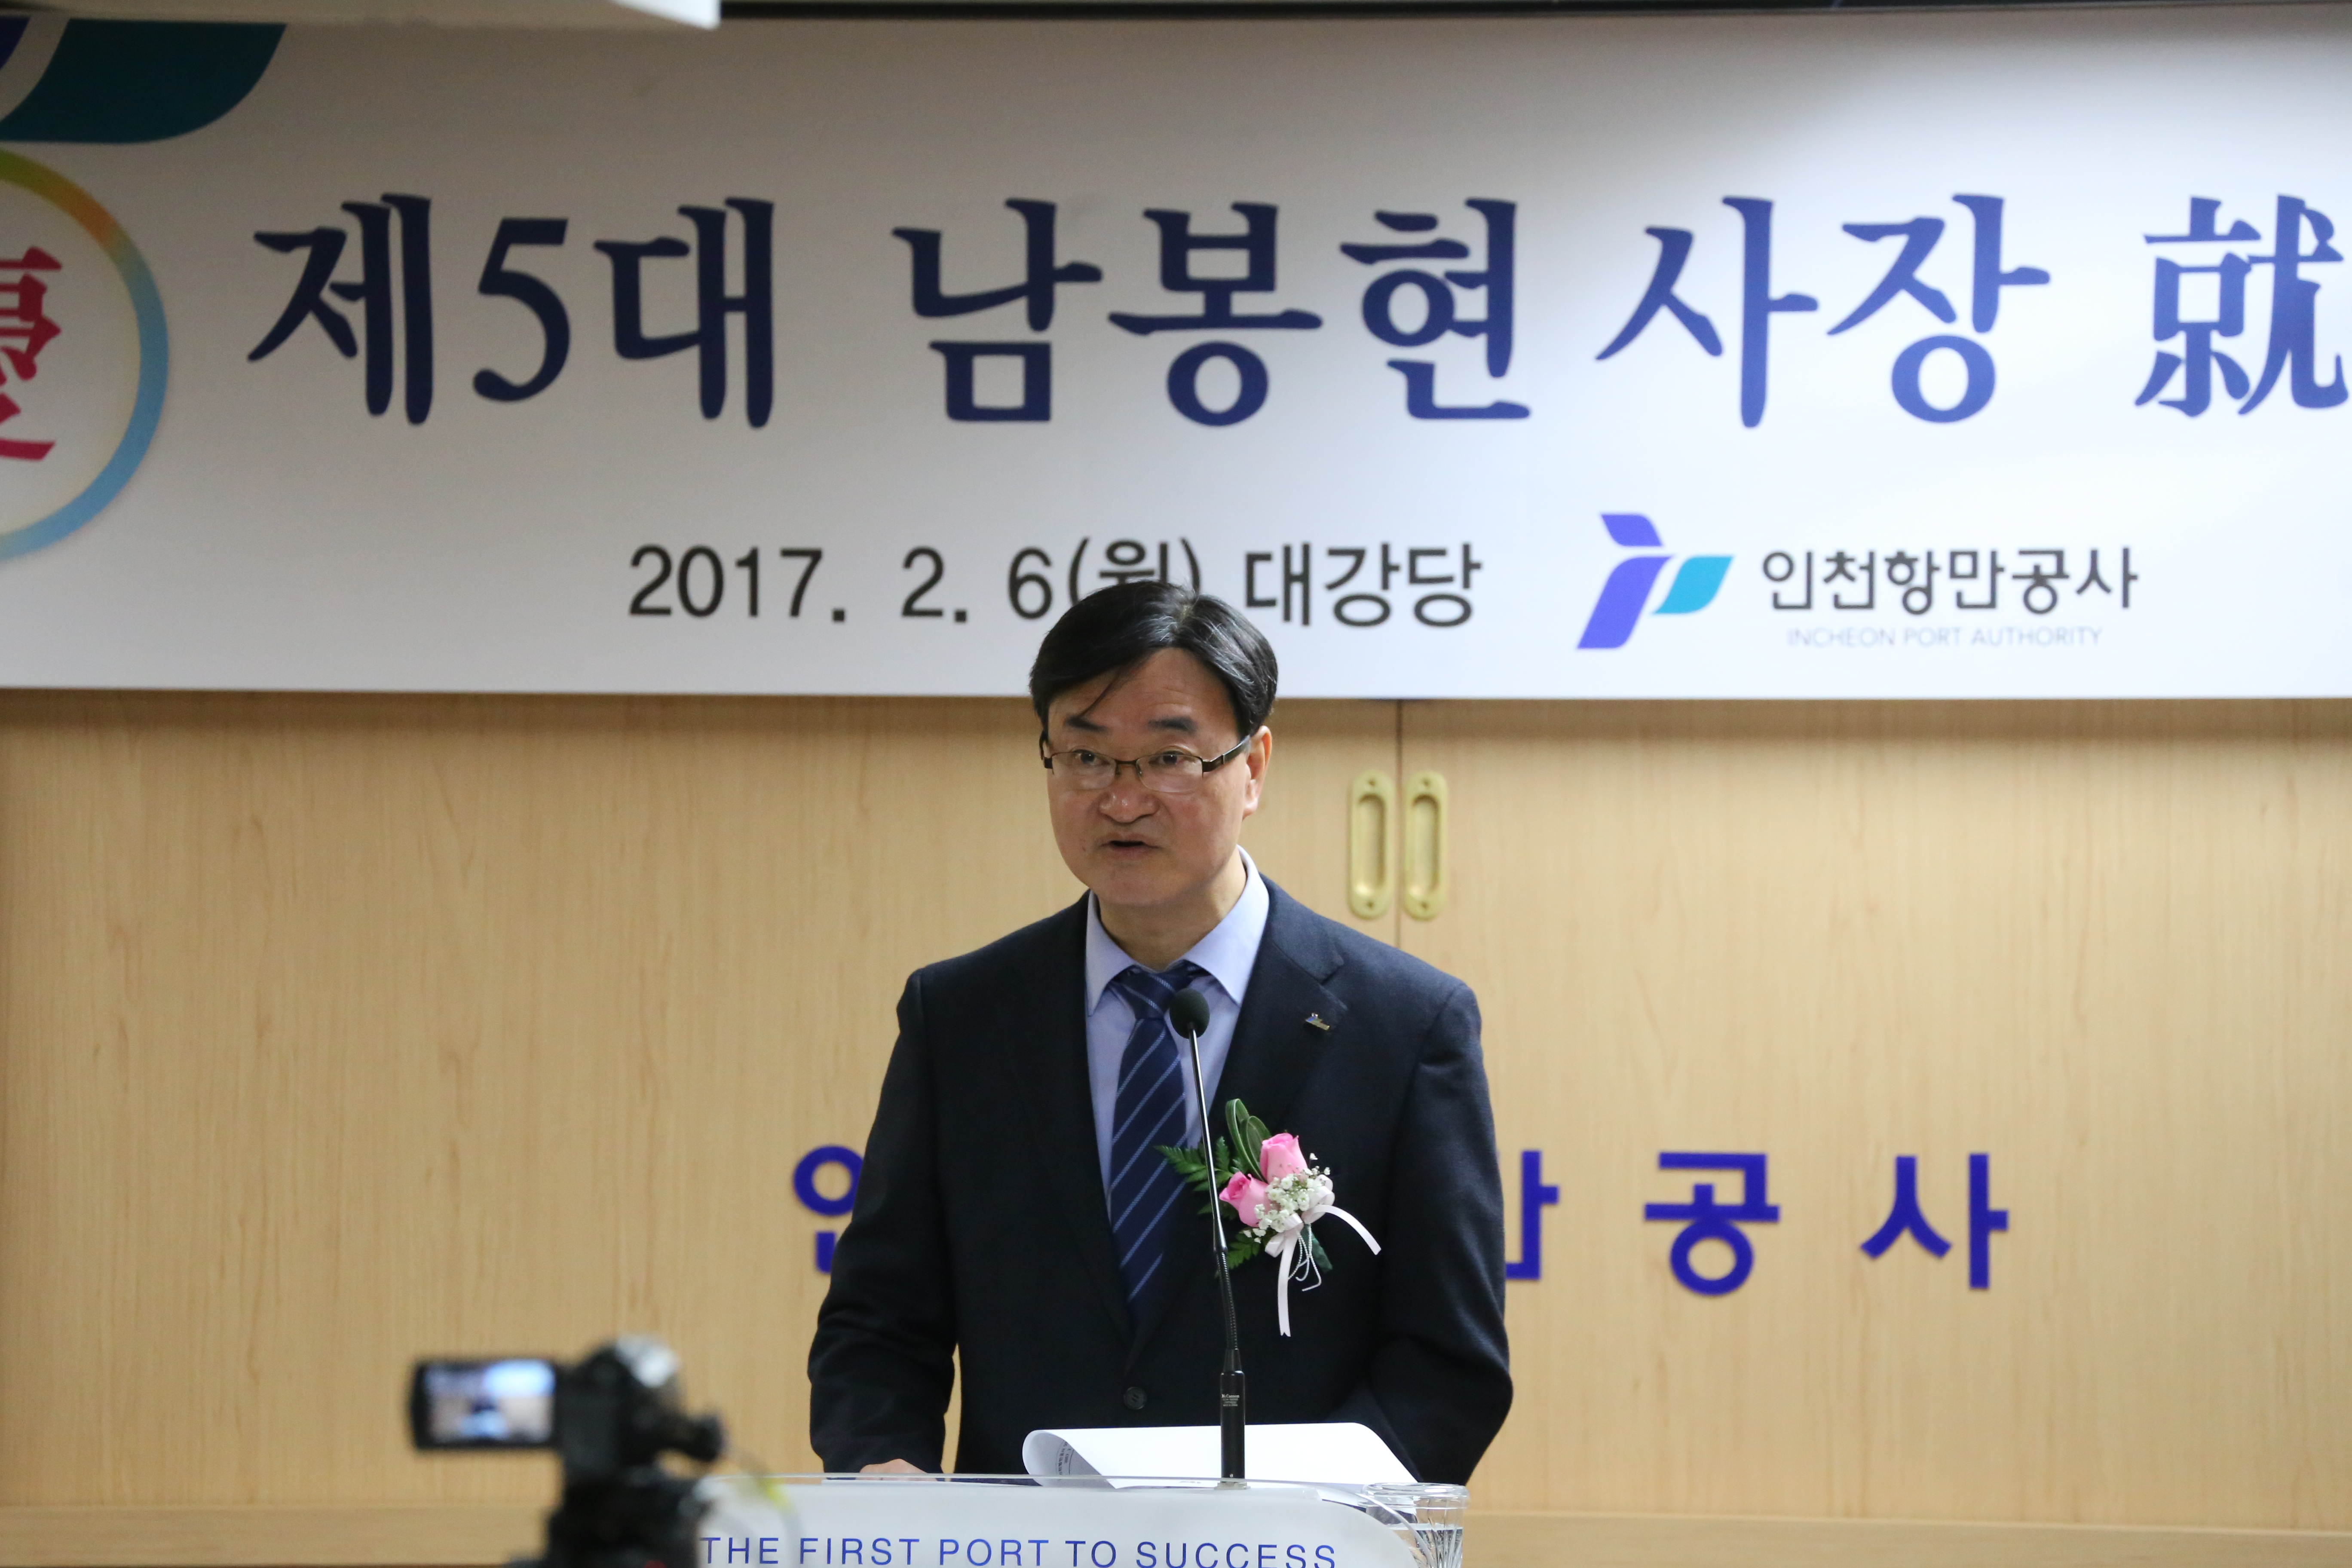 President Nam, Bong-hyun is reading his inaugural address.